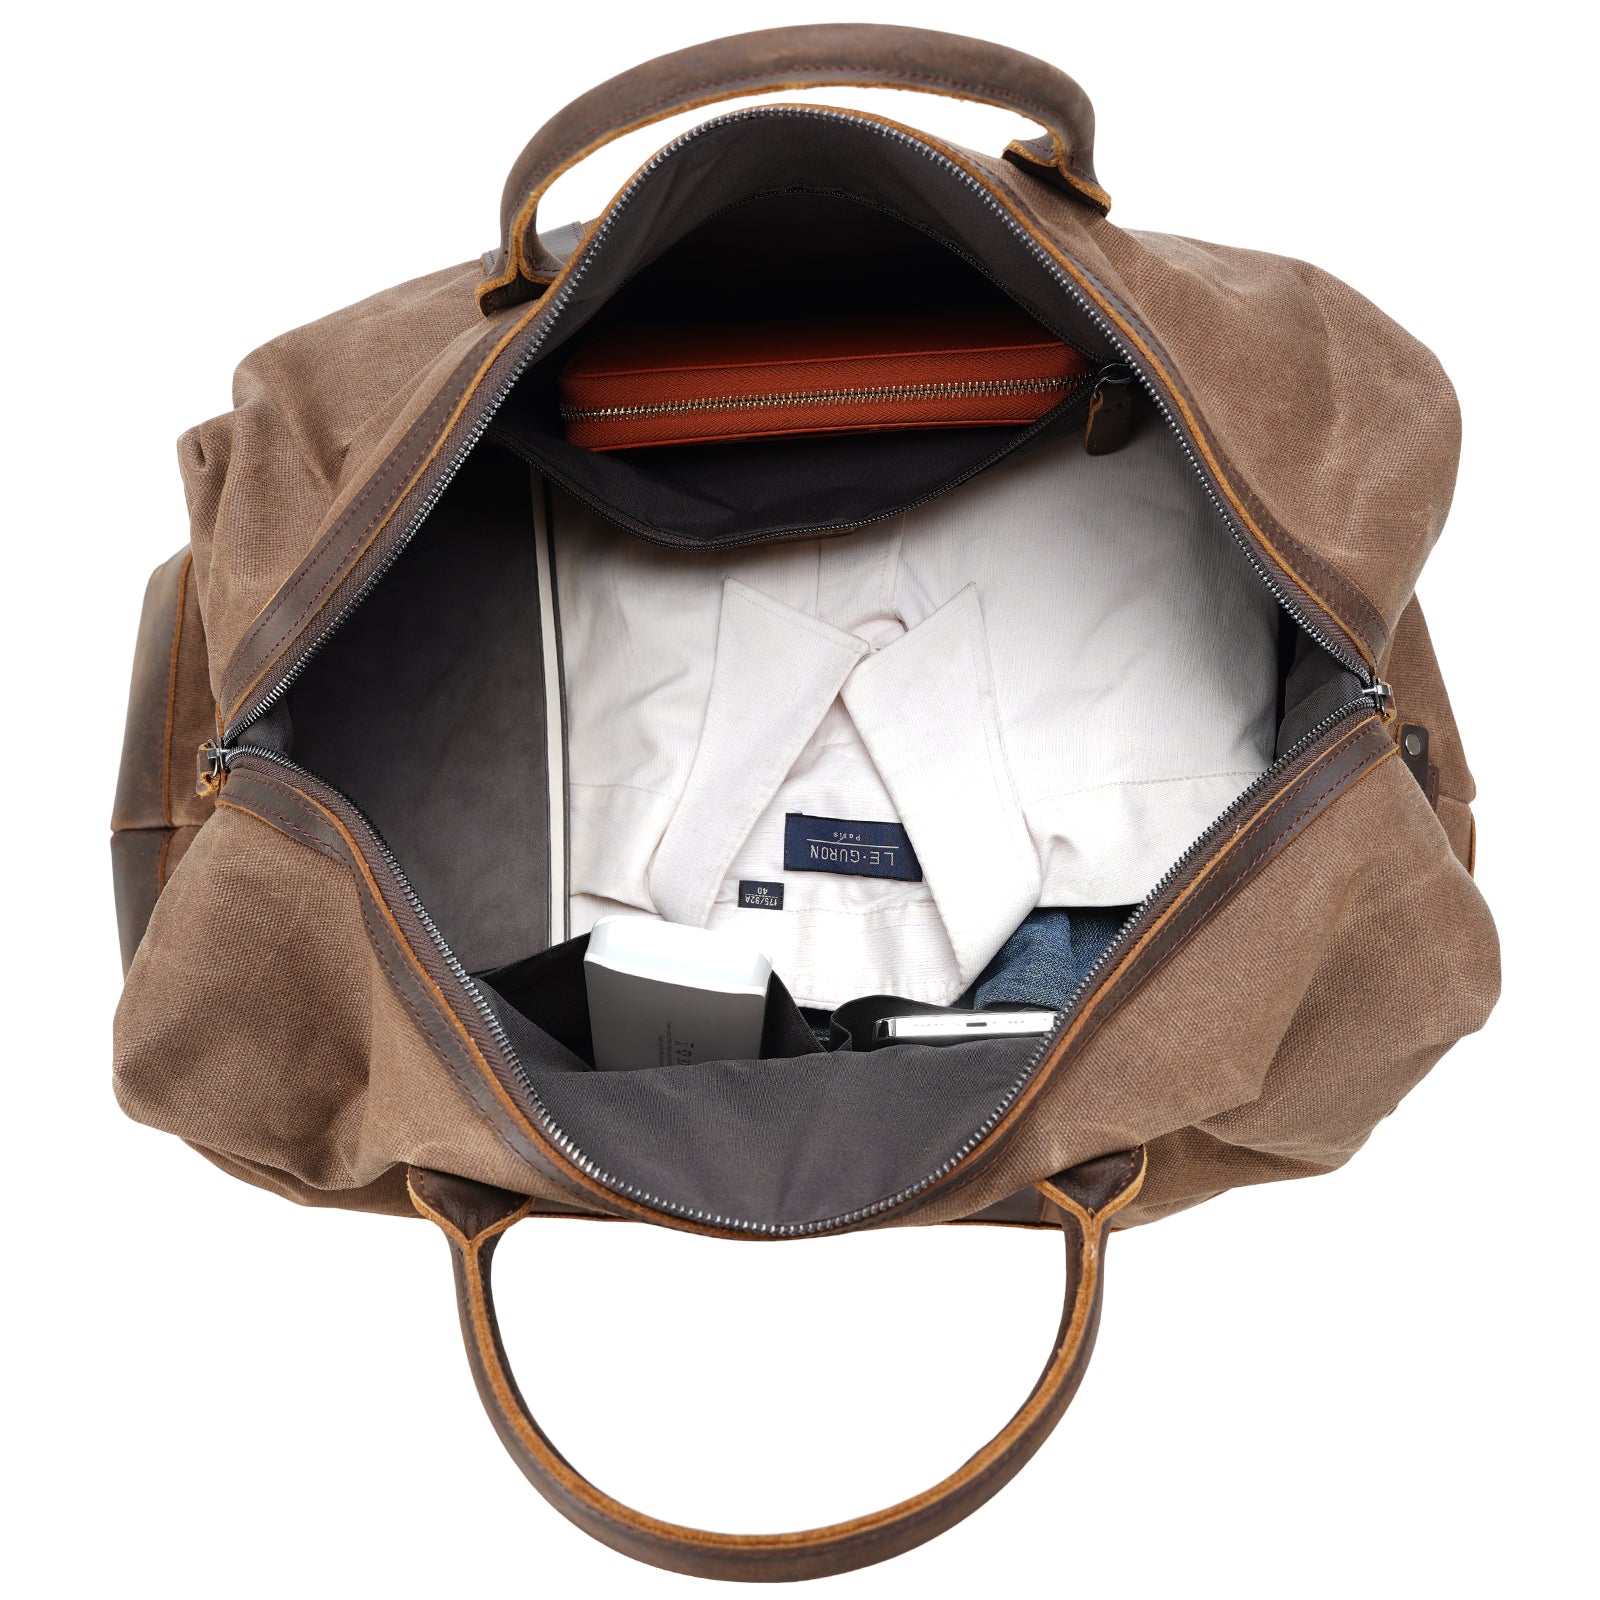 Polare 23” Cowhide Leather Waterproof Waxed Canvas Travel Duffel Bag (Inside)